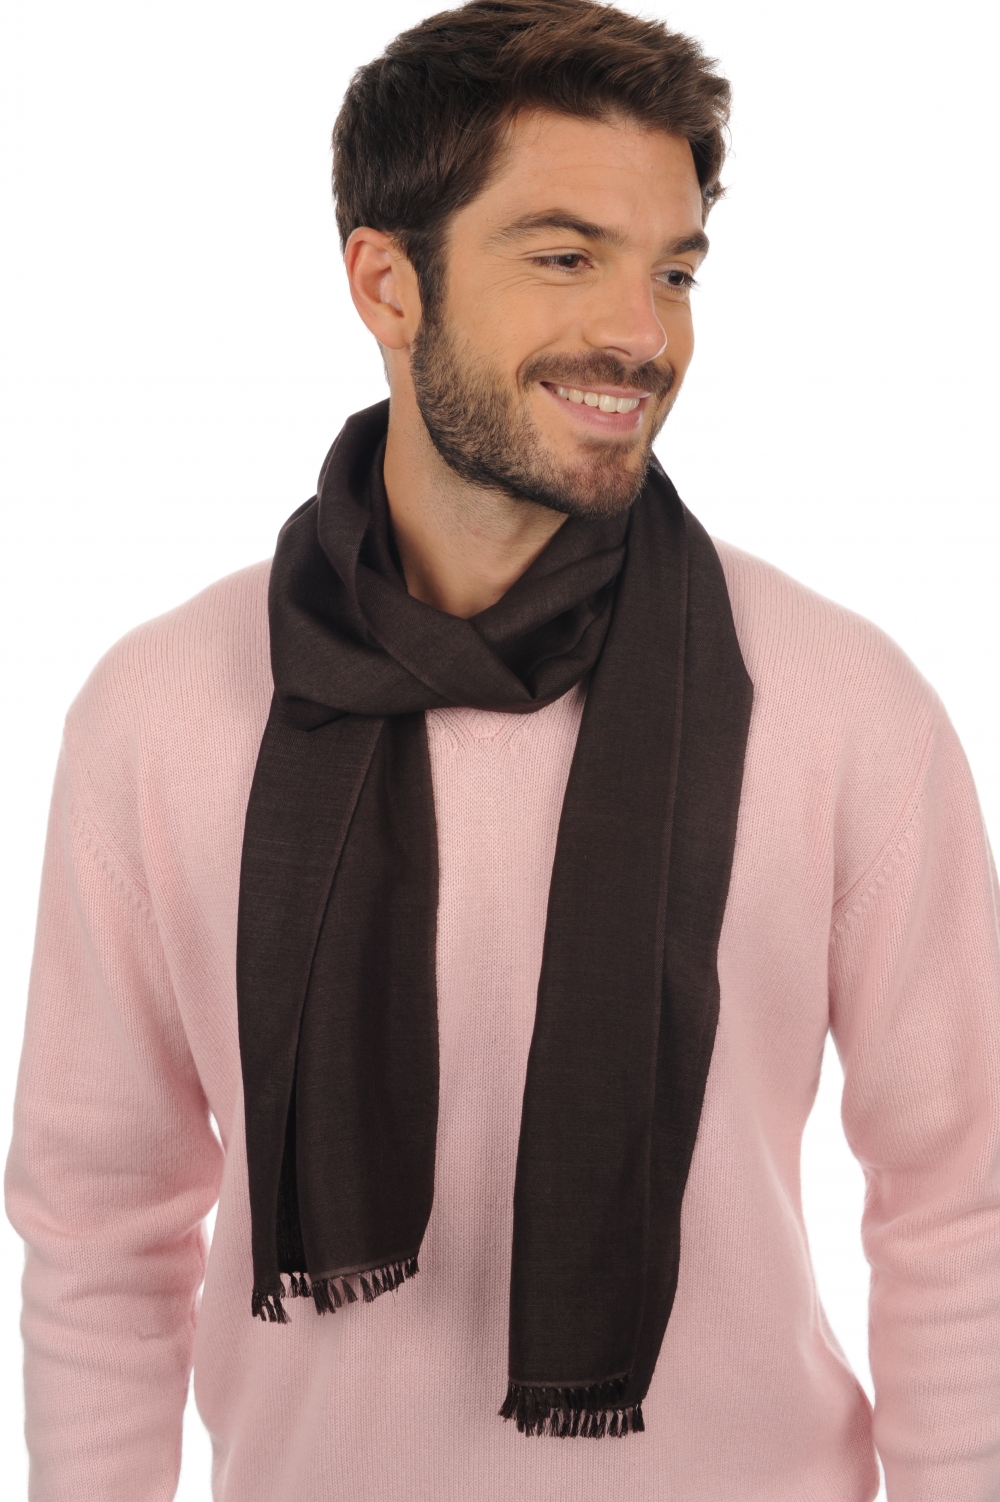 Cashmere & Zijde accessoires scarva donkerbruin 170x25cm